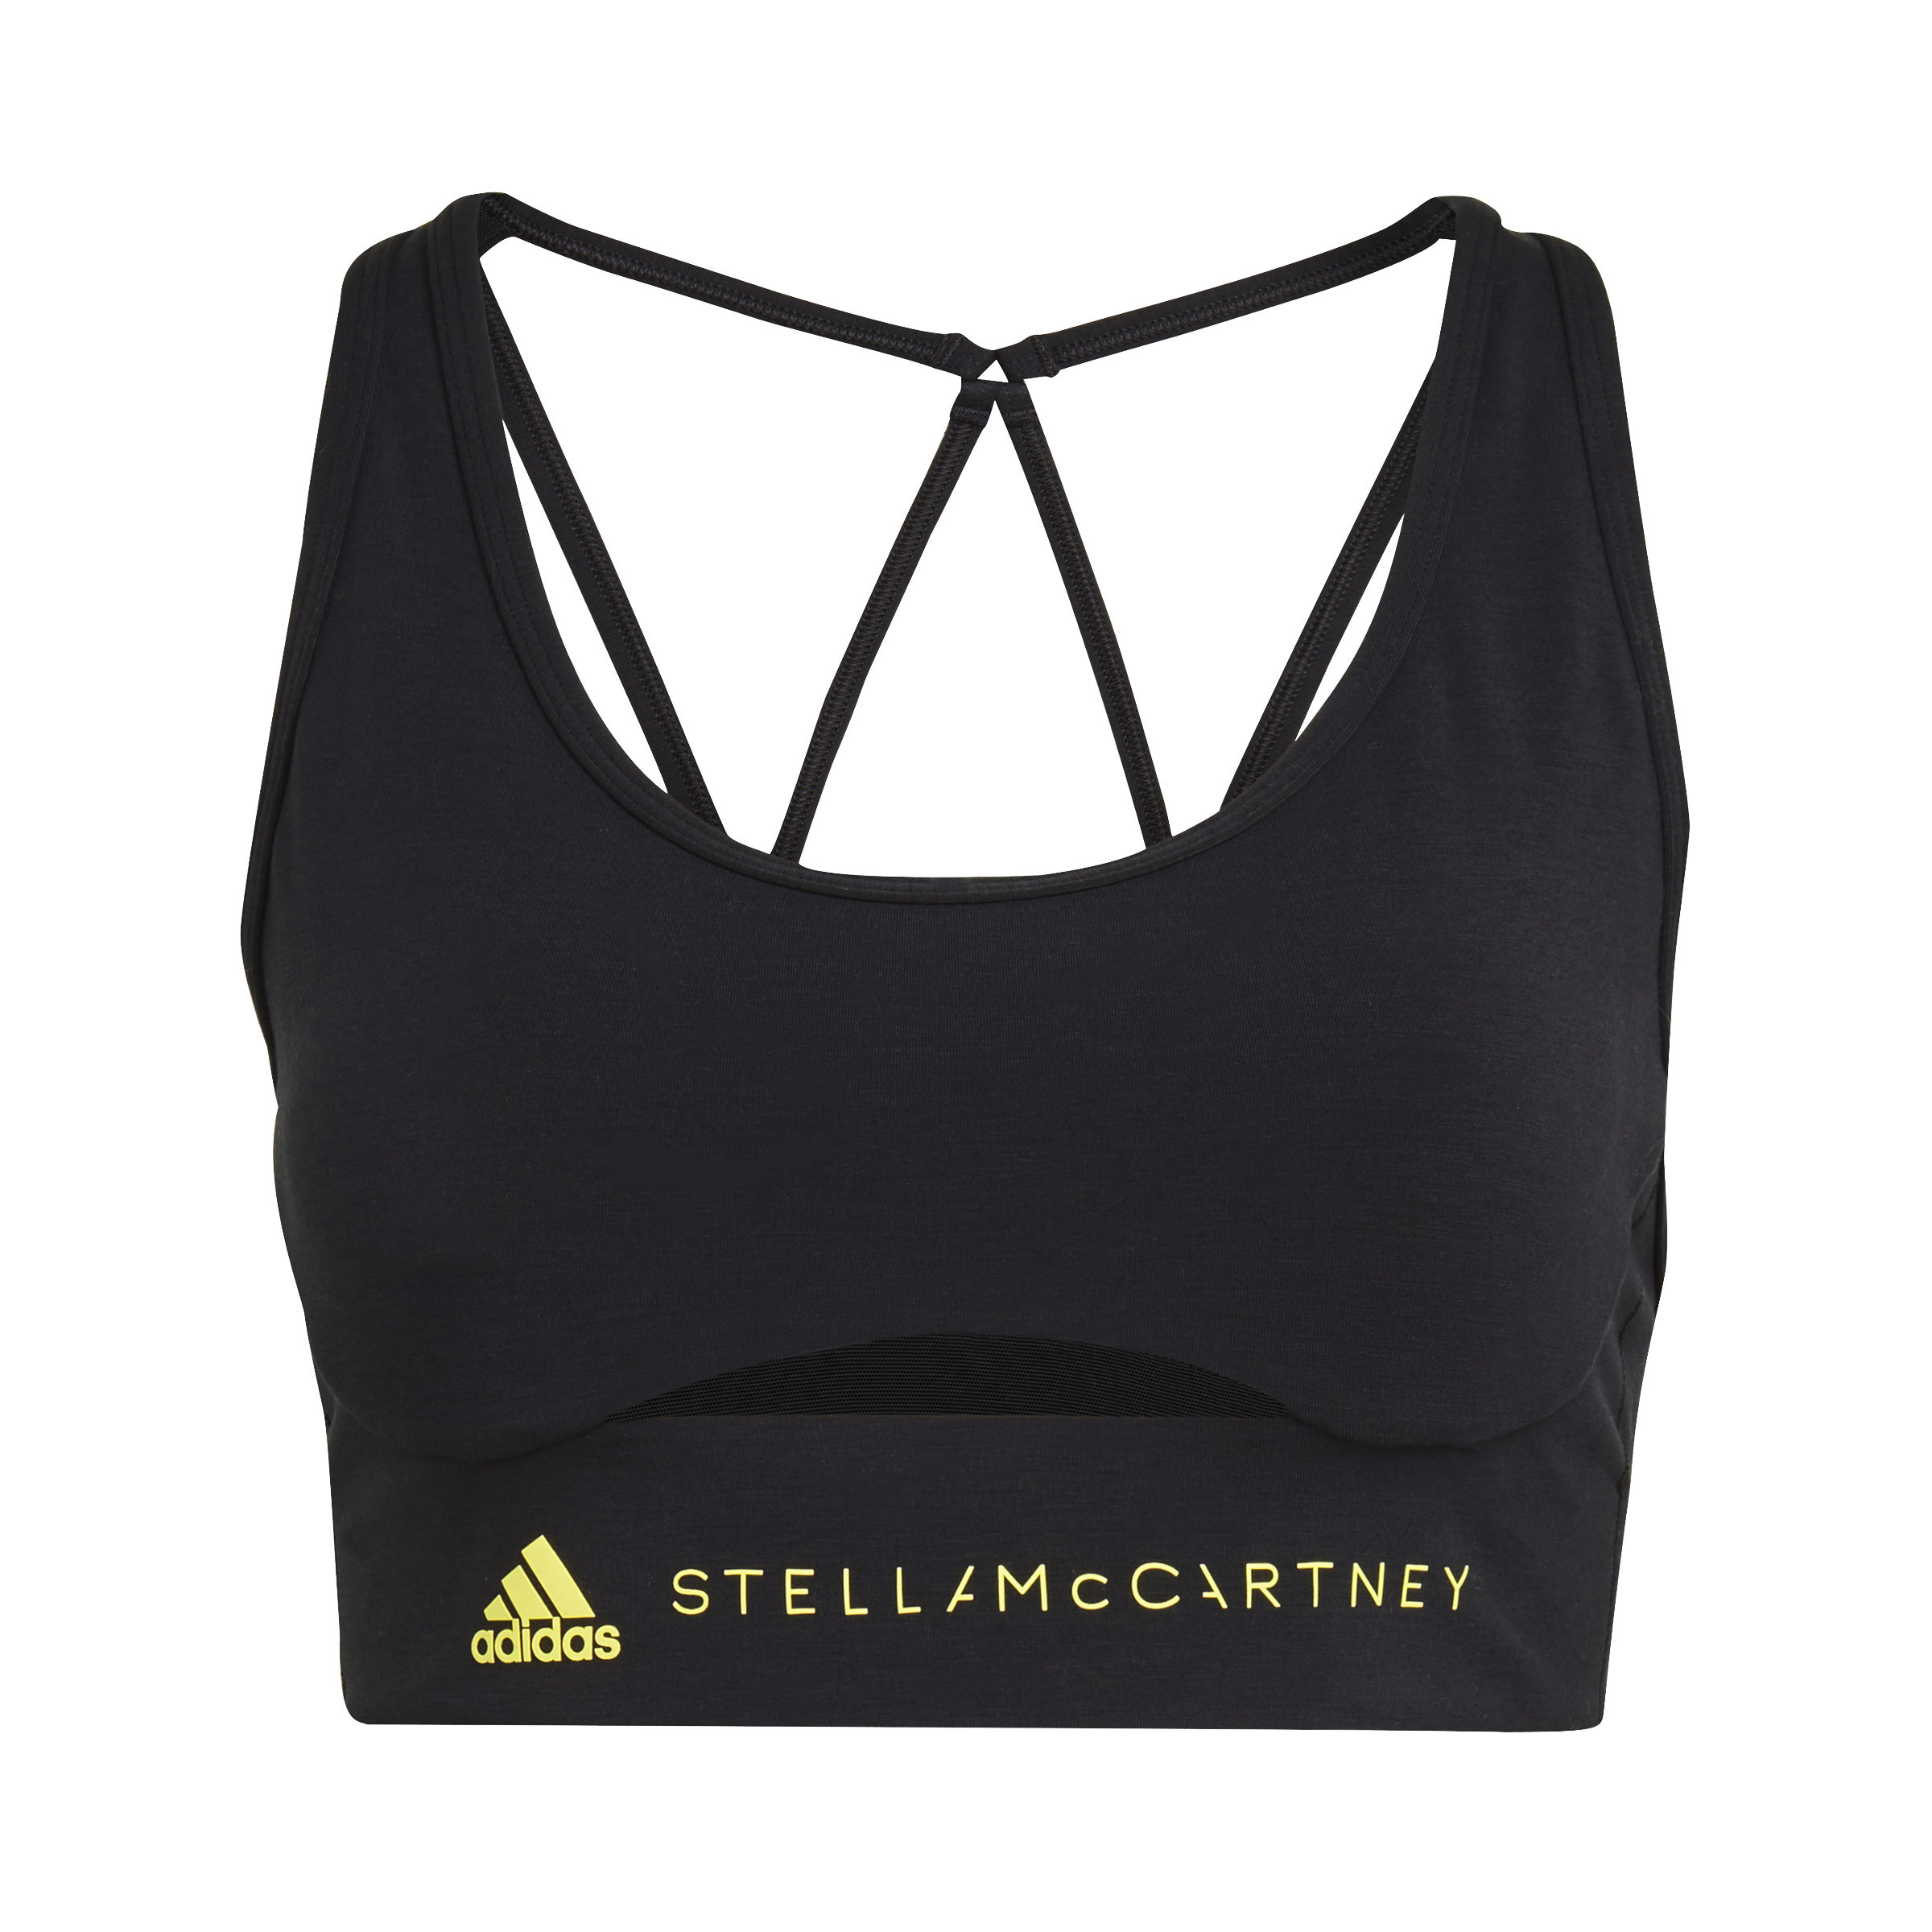 Adidas by Stella McCartney - TrueStrength Medium-Support Sports Bra, Black, large image number 0